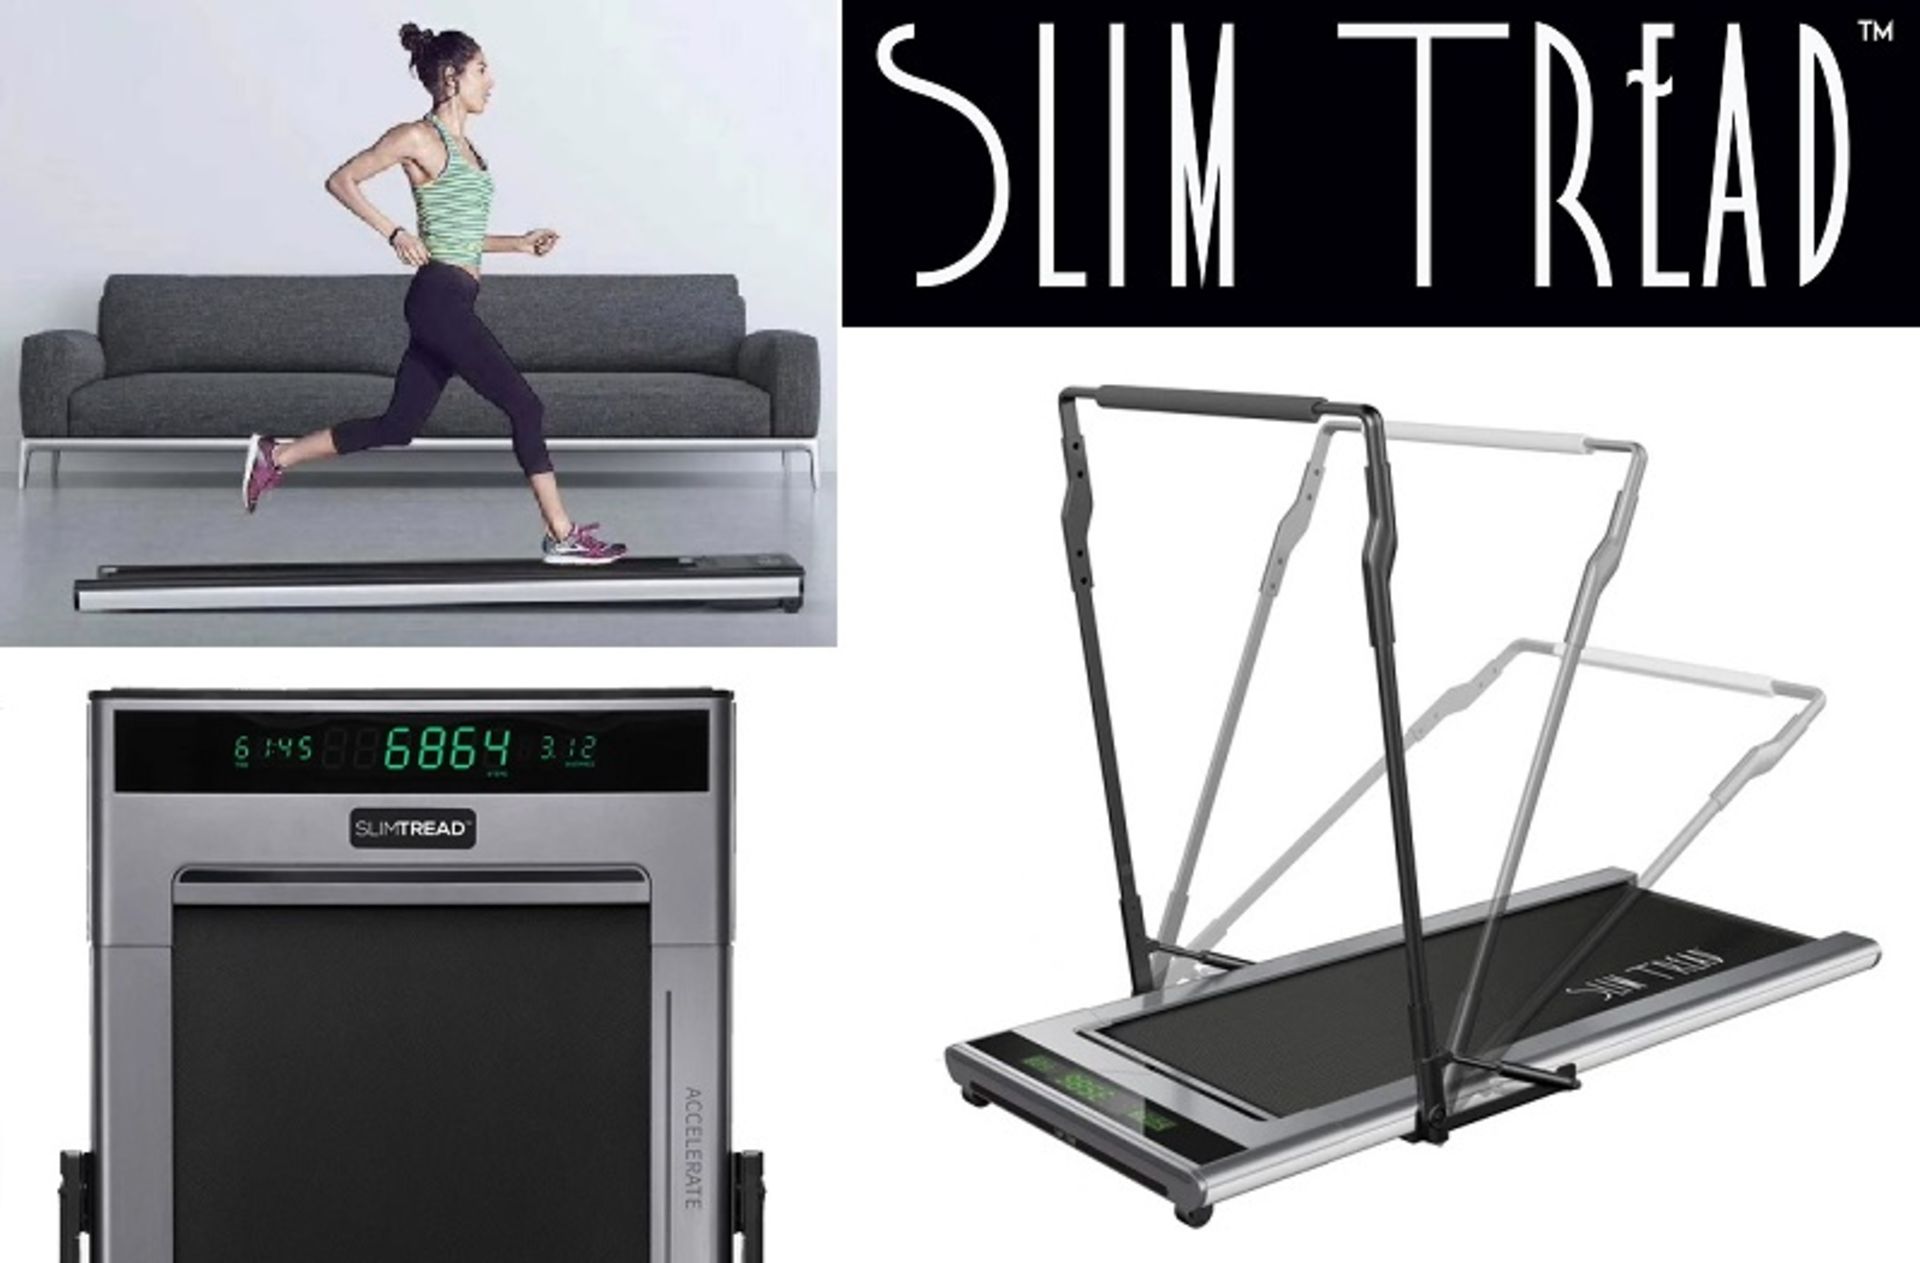 1 x Slim Tread Ultra Thin Smart Treadmill Running Machine - Brand New Sealed Stock - RRP £799!